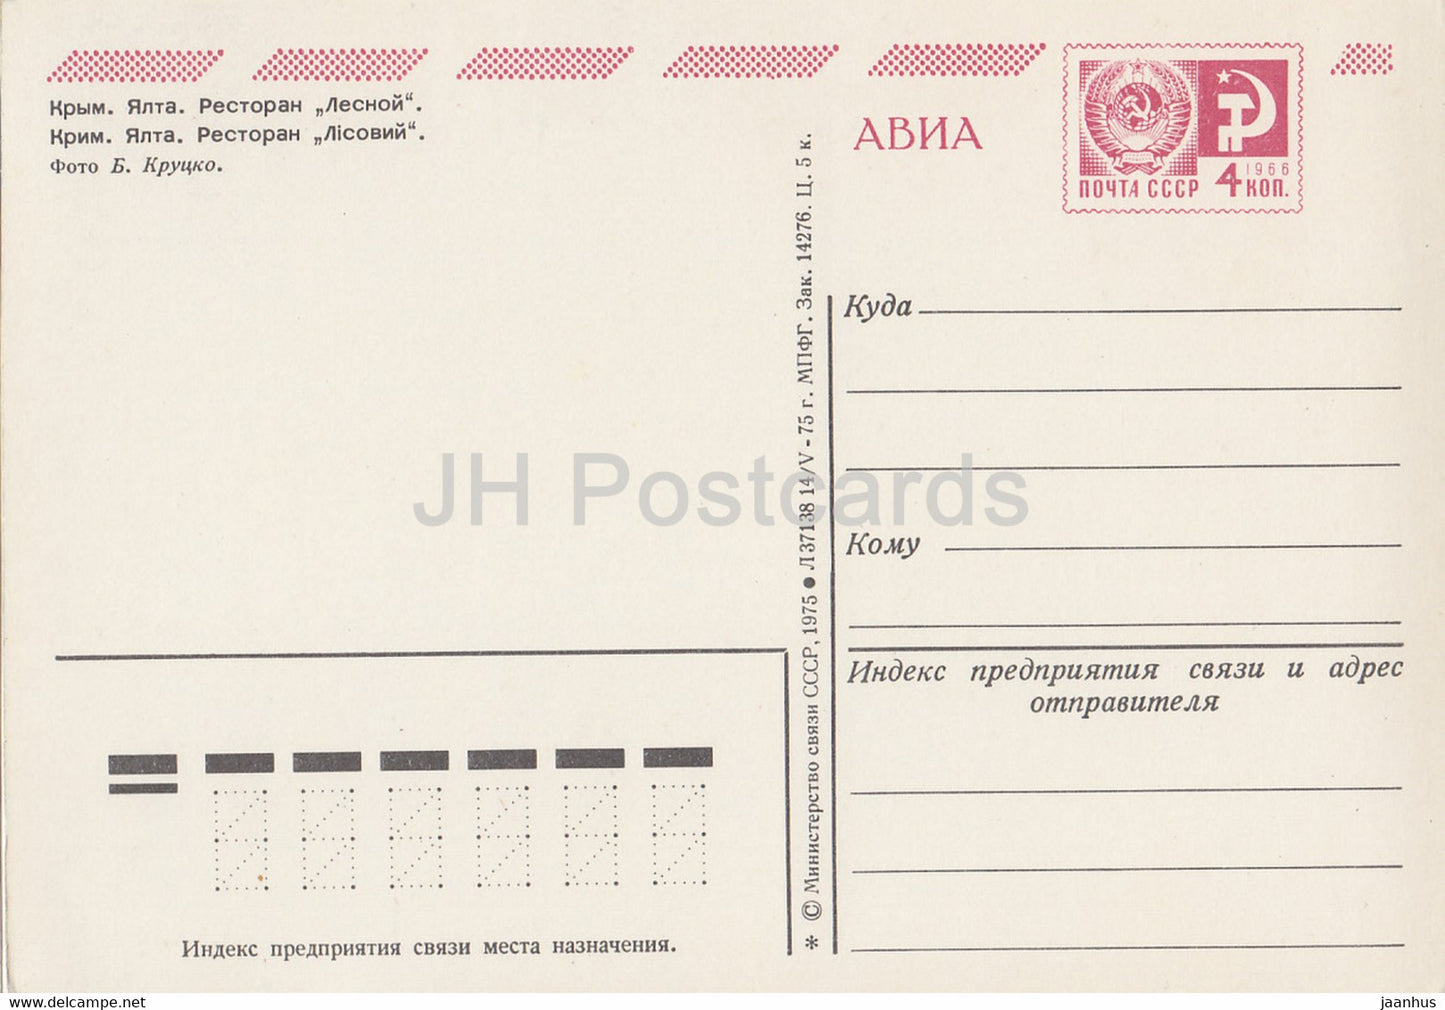 Crimea - Yalta - restaurant Lesnoy - AVIA - postal stationery - 1975 - Ukraine USSR - unused